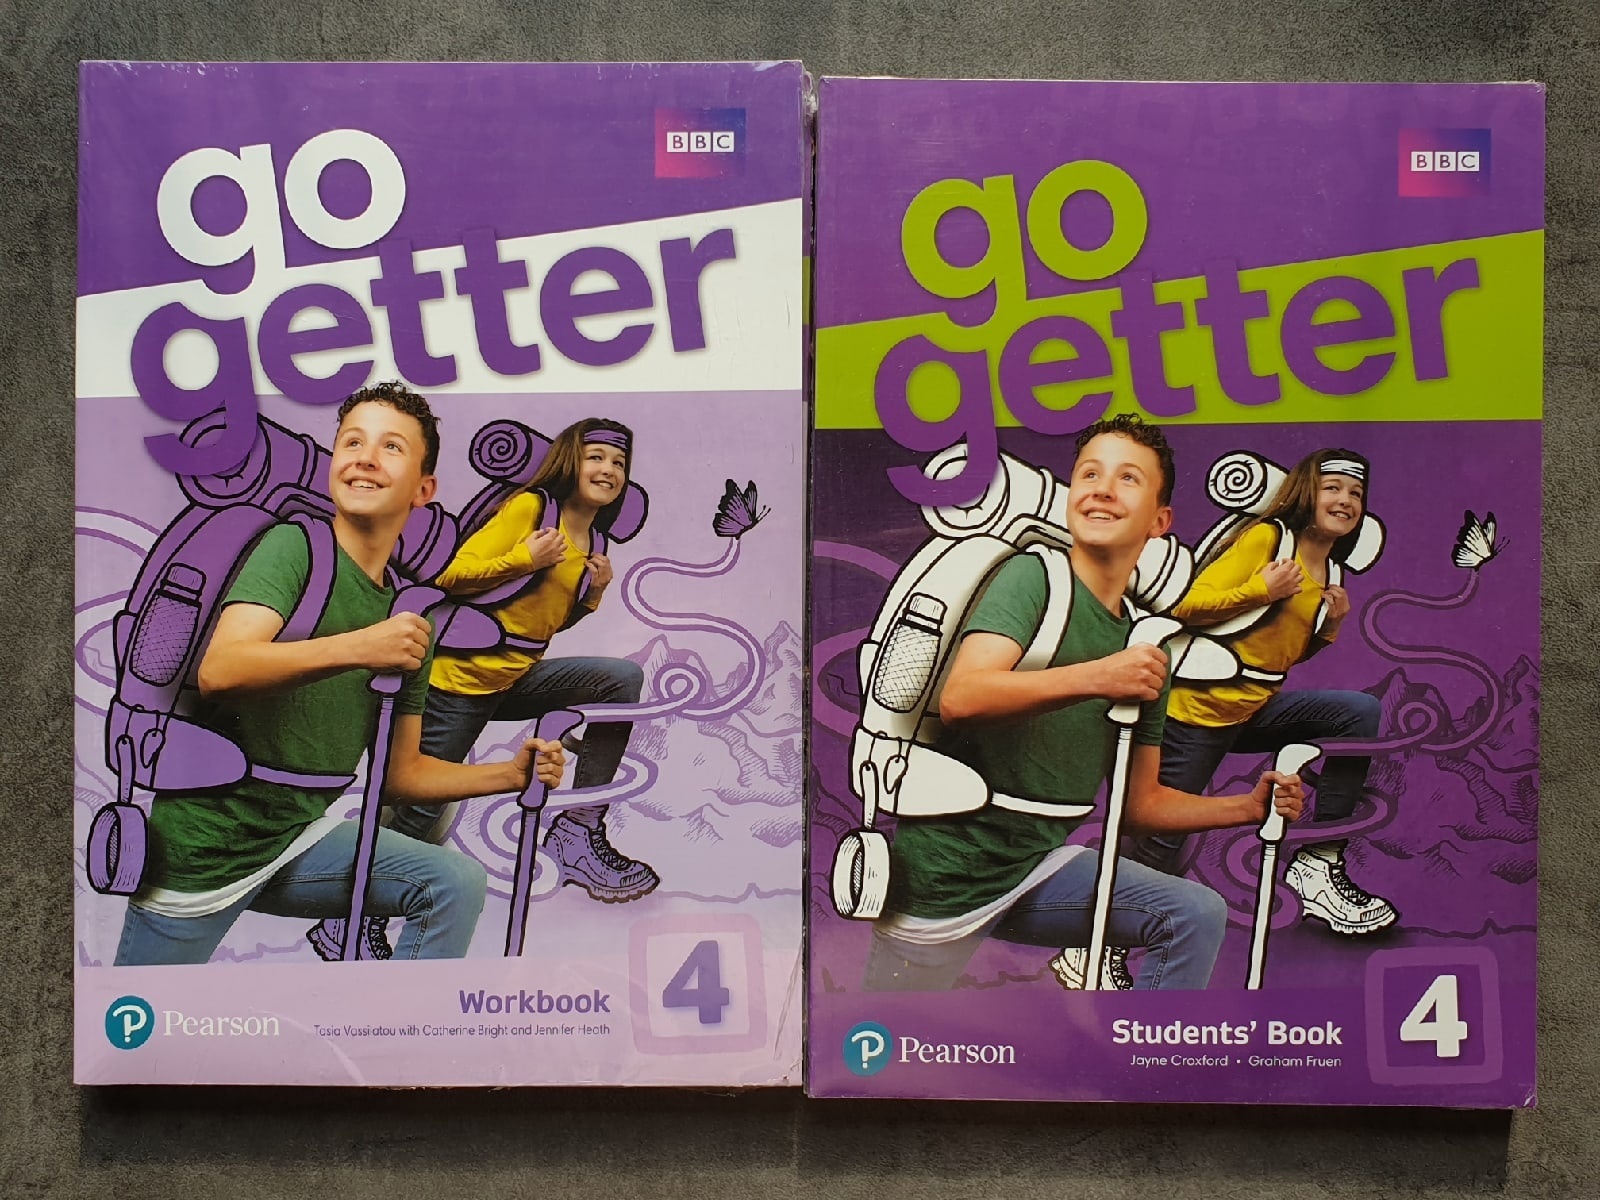 Язык go книги. Учебник Pearson go Getter. Go Getter 1 Workbook. Go Getter 3 student's book. Учебник go Getter 4.